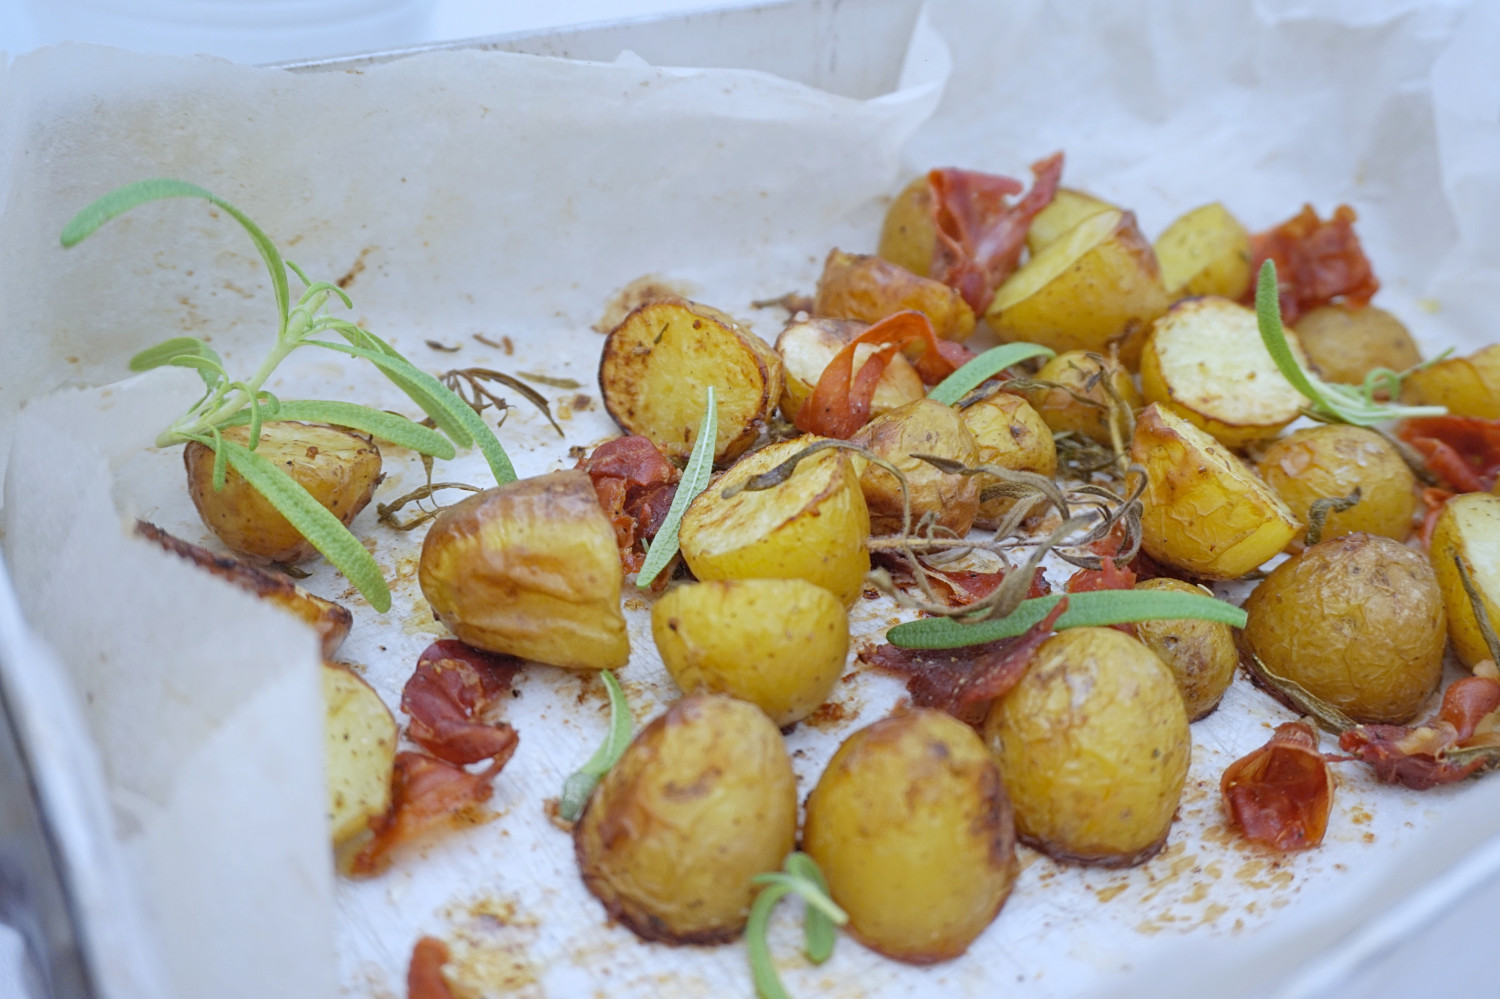 Ovnbagte kartofler med rosmarin og serranoskinke | Salat/Grønt |  camilladrabo